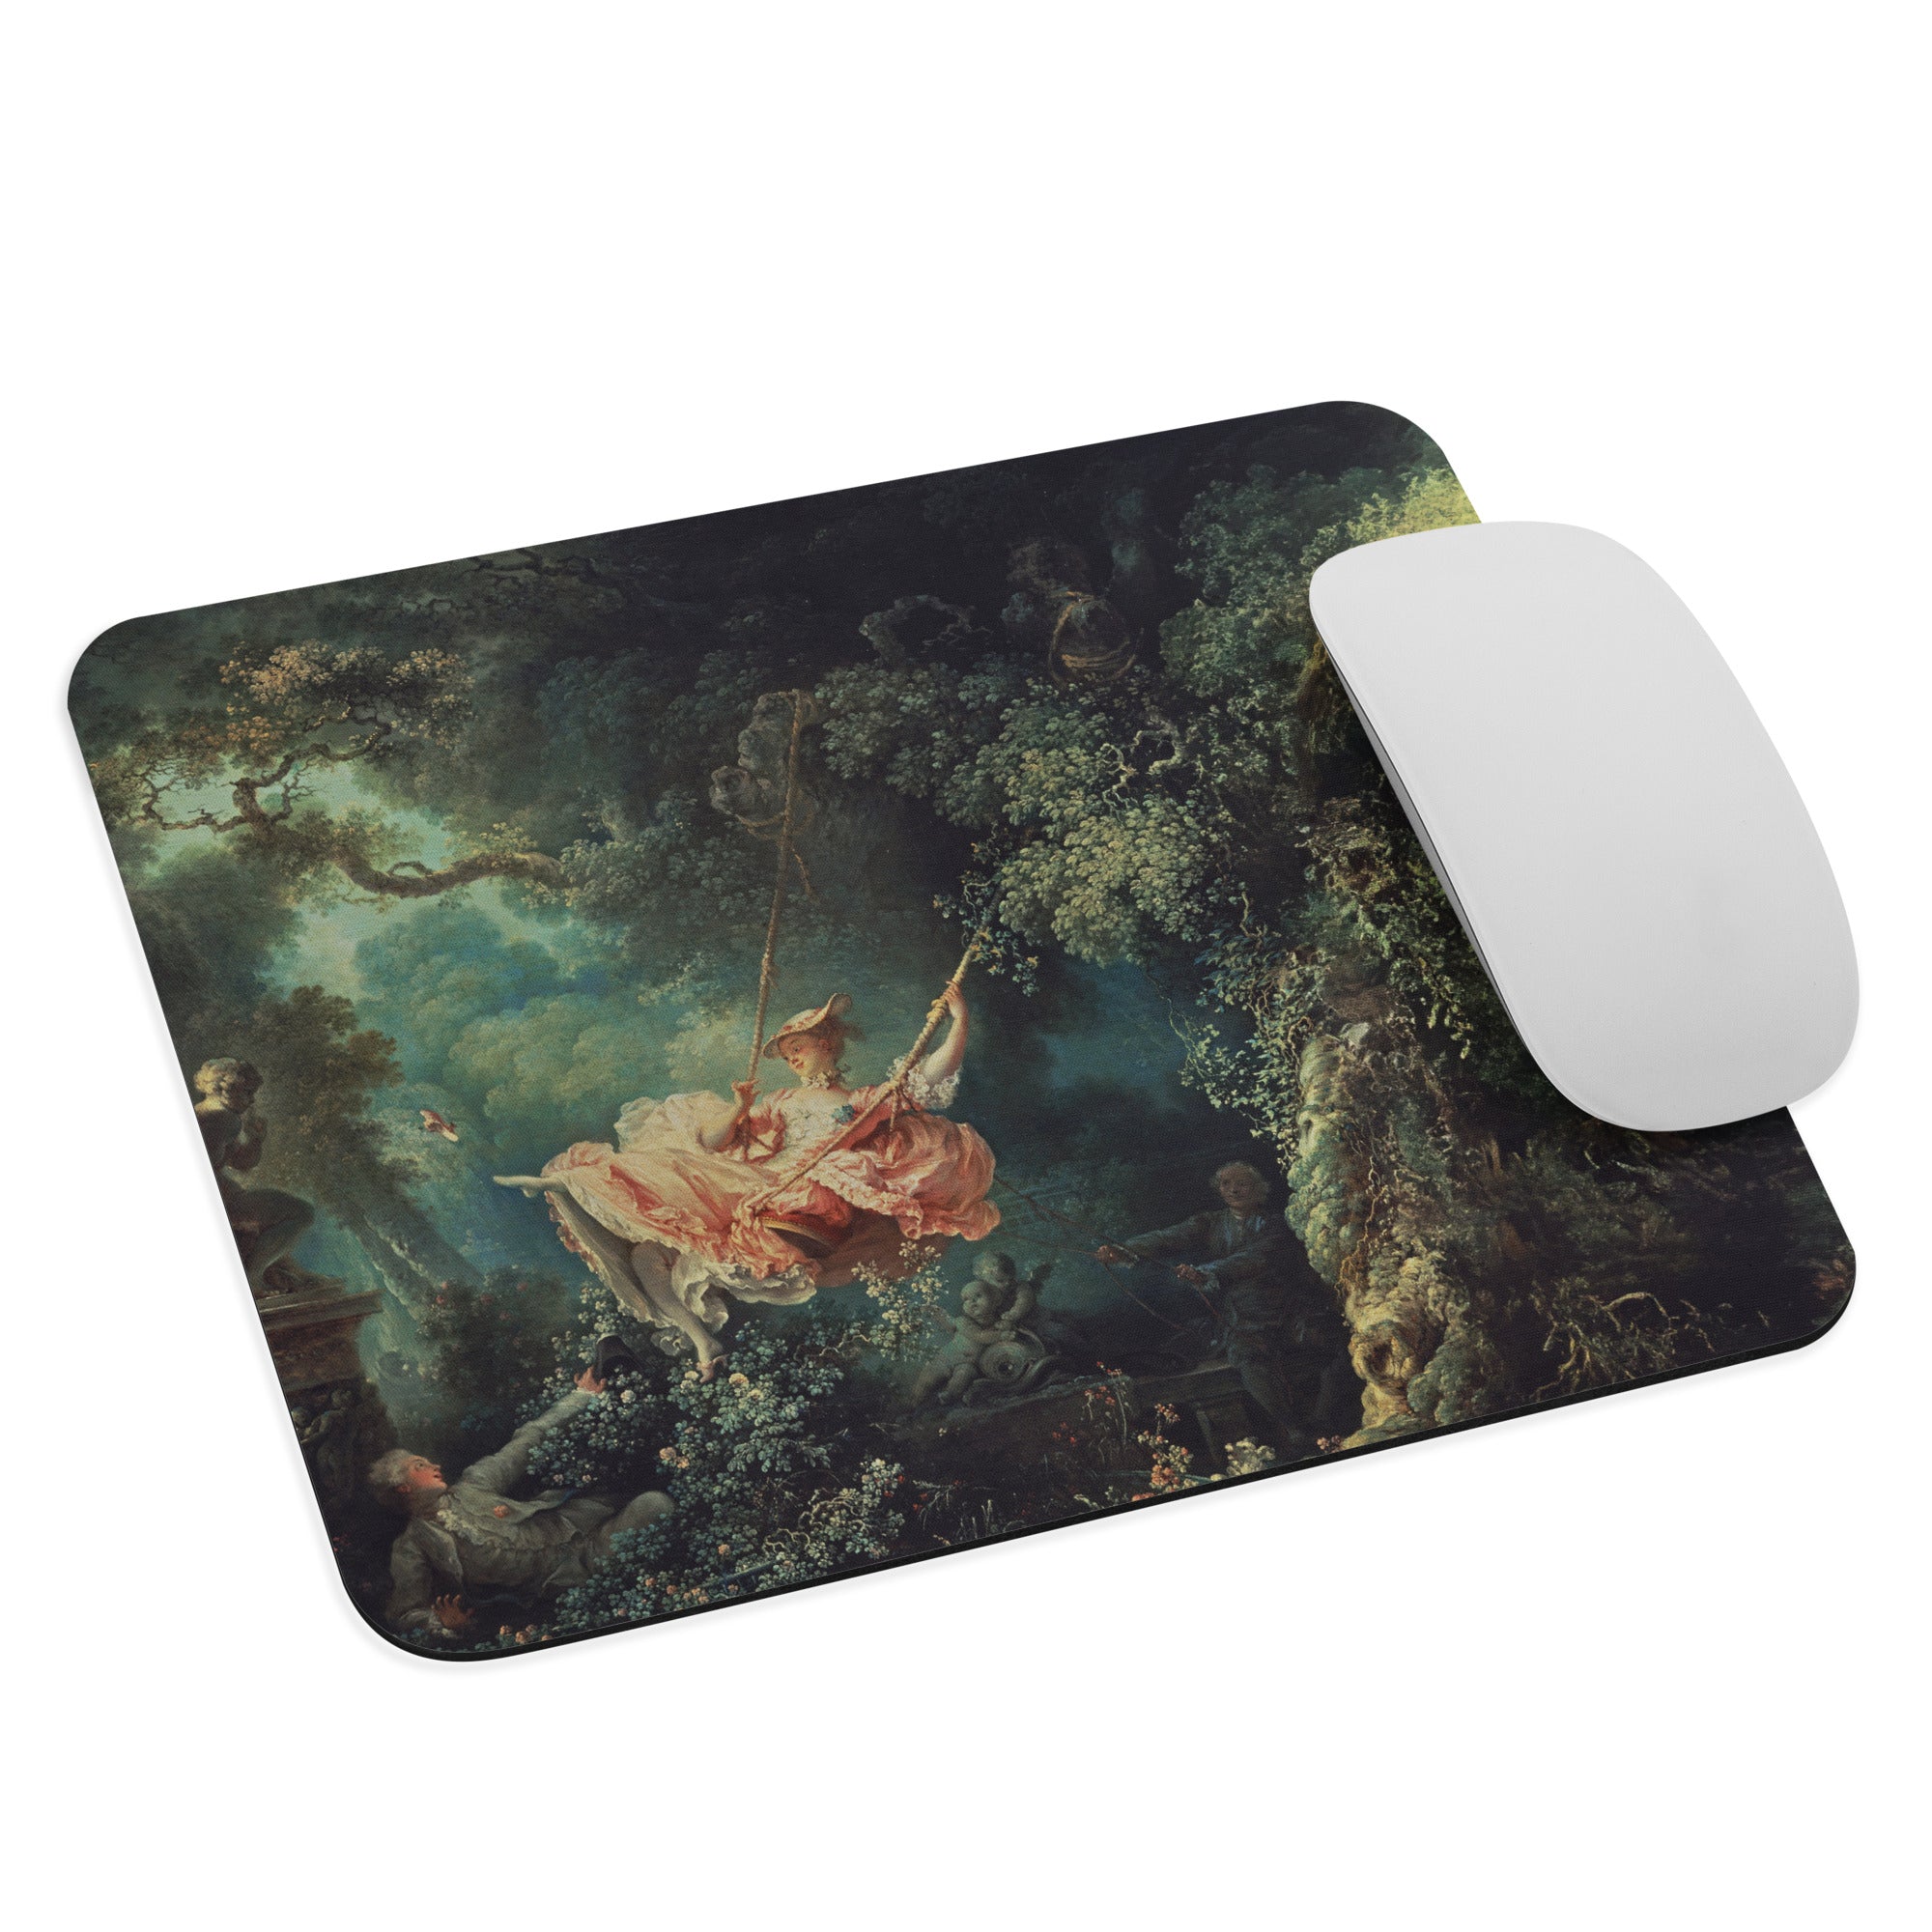 Jean-Honoré Fragonard 'The Swing' Famous Painting Mouse Pad | Premium Art Mouse Pad